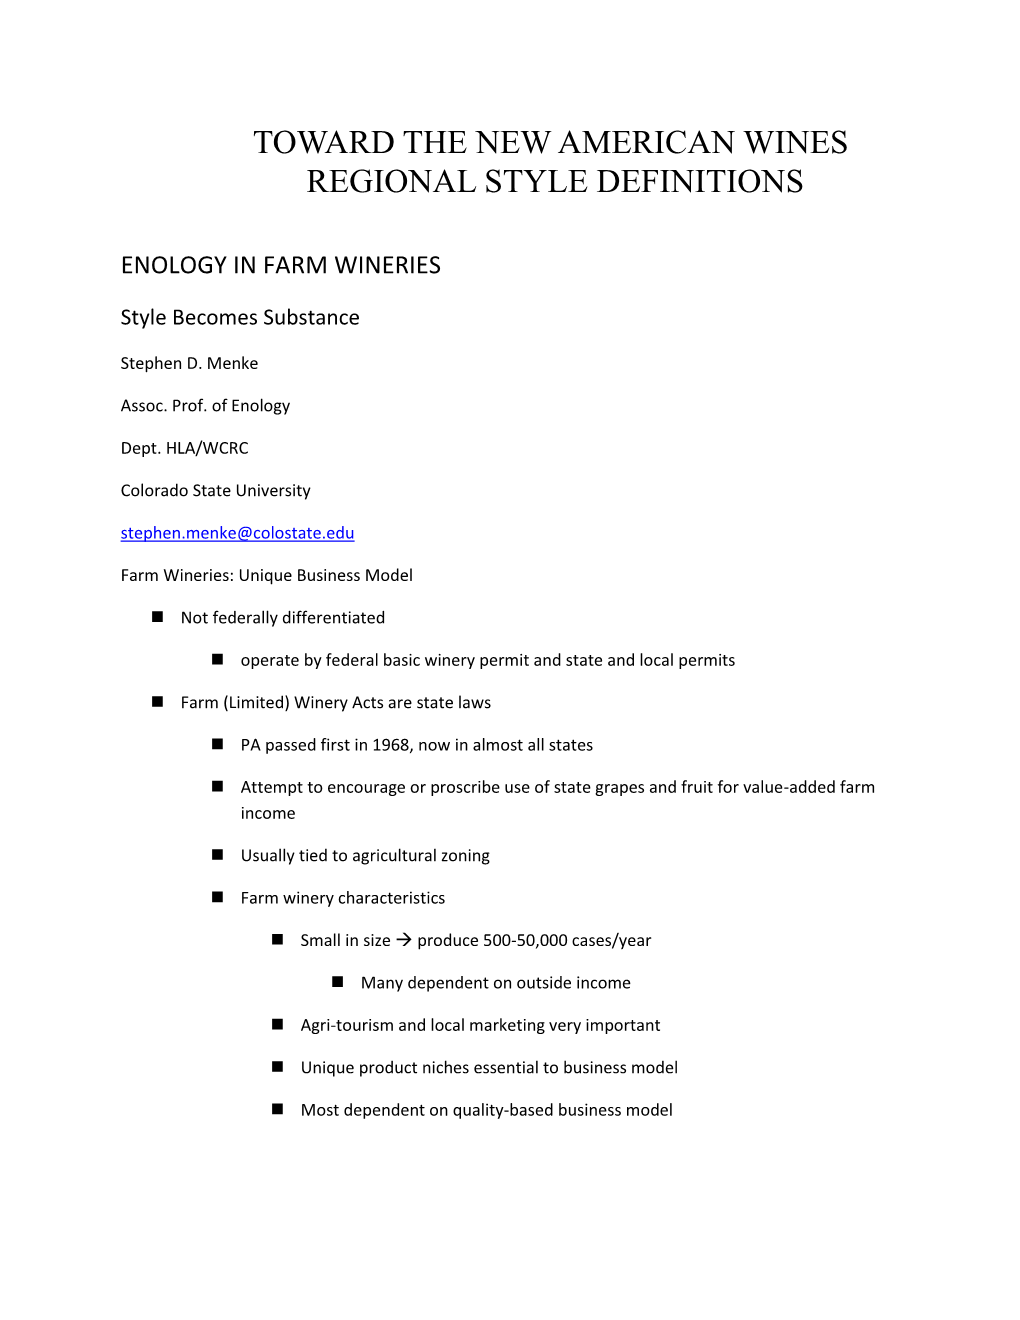 Regional Style Definitions